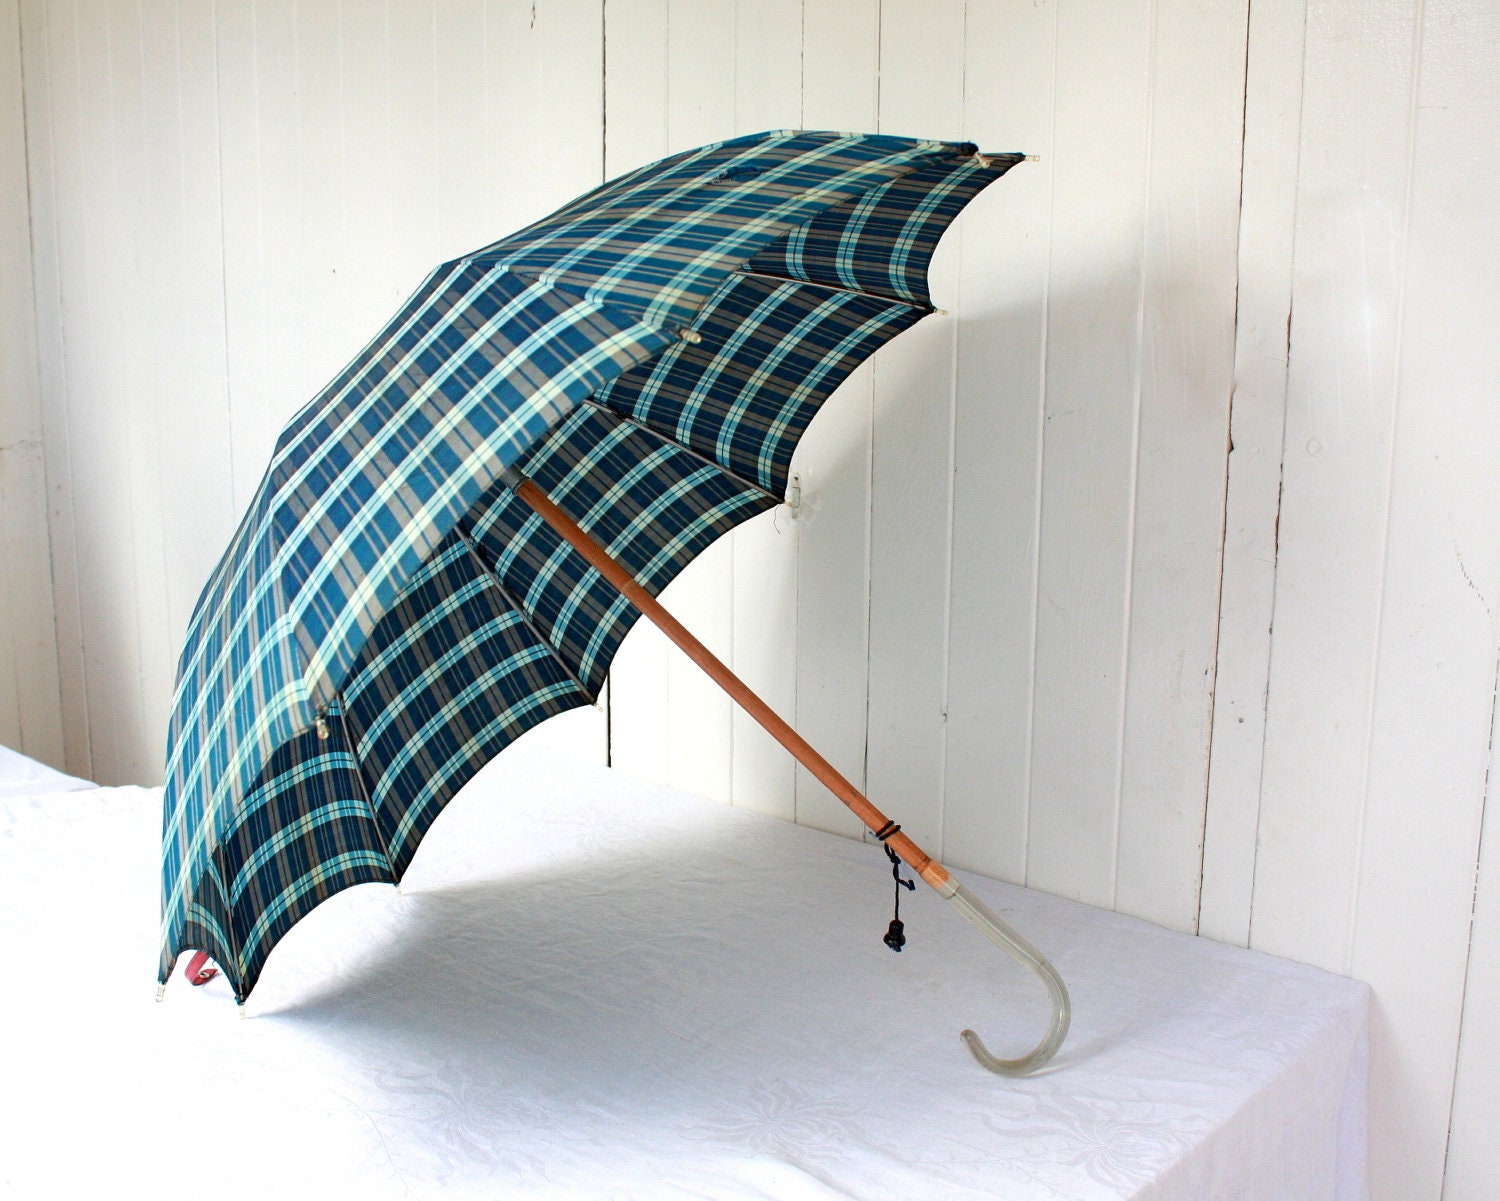 Vintage Umbrella with Lucite Handle, Blue Plaid Umbrella, Vintage Accessories, Fall, Winter - SummerHolidayVintage